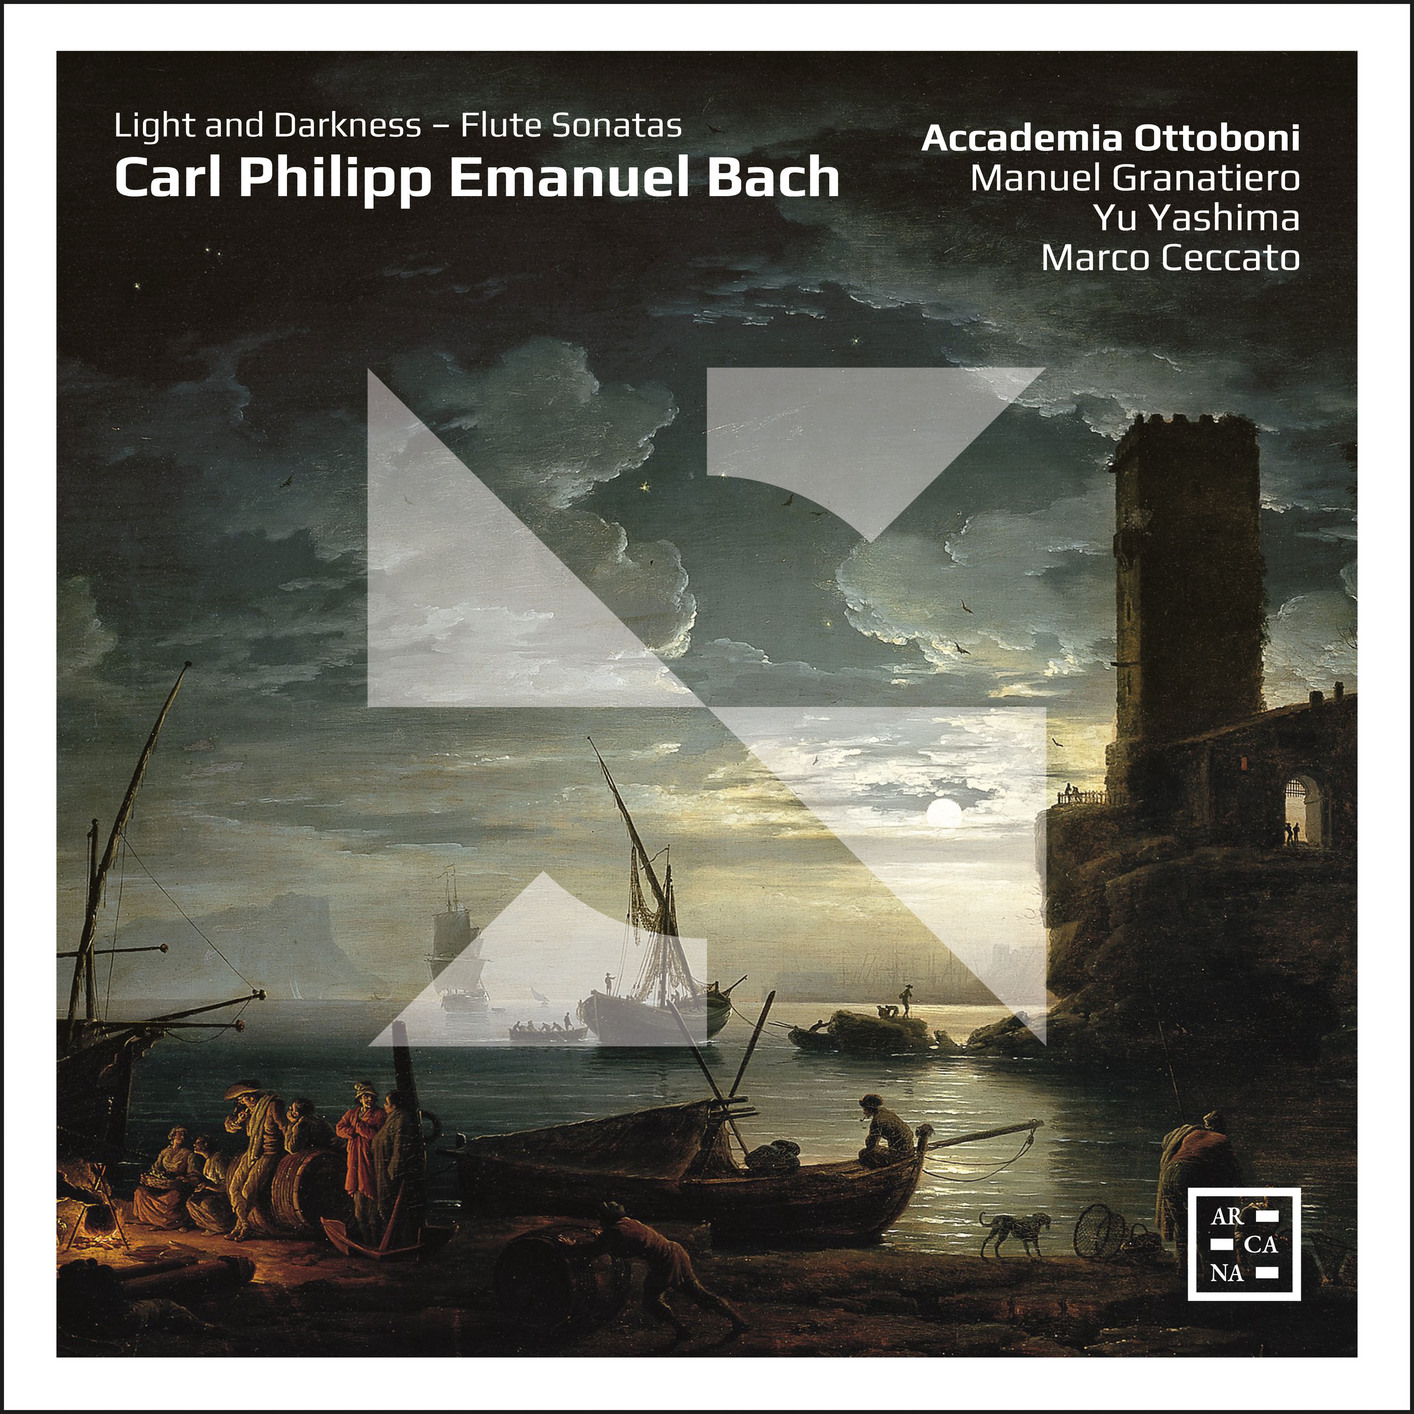 CPE Bach - Flute Sonatas - Light and Darkness - Accademia Ottoboni [24-96]